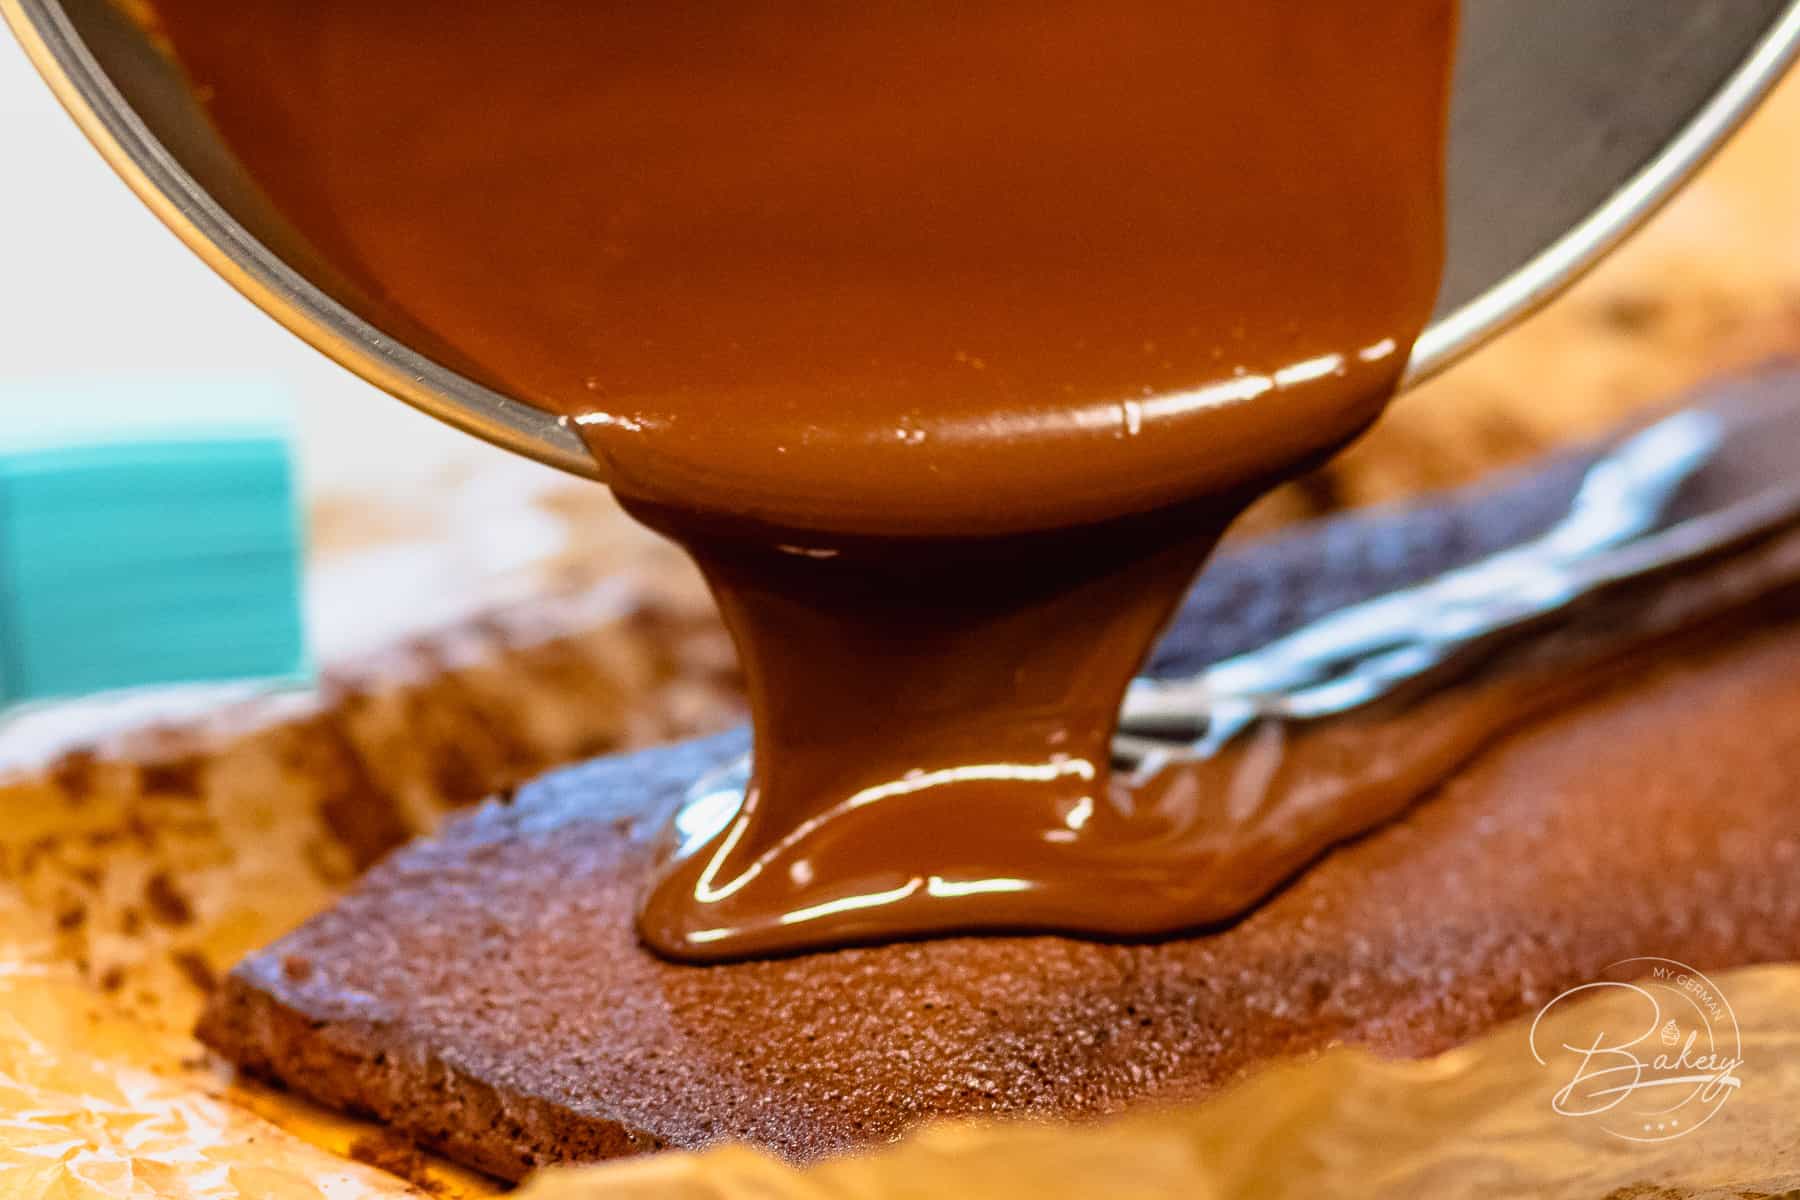 Schokoladen Brownies Rezept - Lebkuchen Brownies Rezept - Backblog / Foodblog / Einfaches Rezept Weihnachtskuchen mit Schokolade - Lebkuchen-Brownie mit Schokolade - Traditionelles Kuchenrezept - Backanleitung - einfacher schneller Brownie-Kuchen